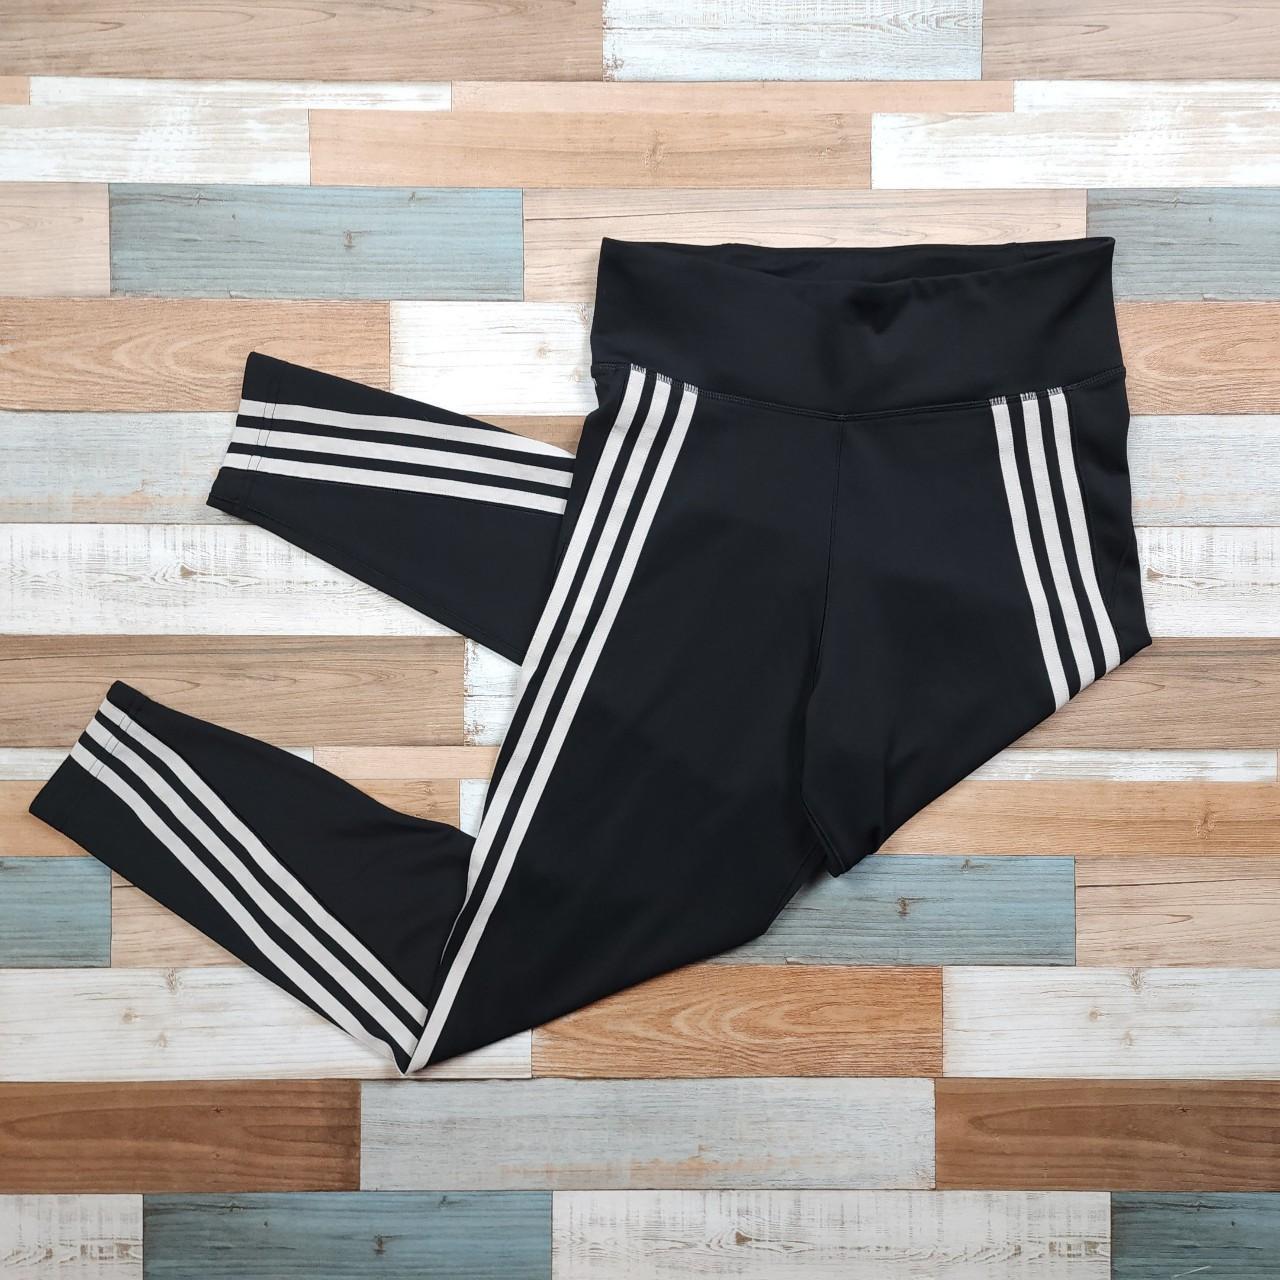 Adidas 3 Stripes Womens Black Leggings Gym Yoga Running Pants size